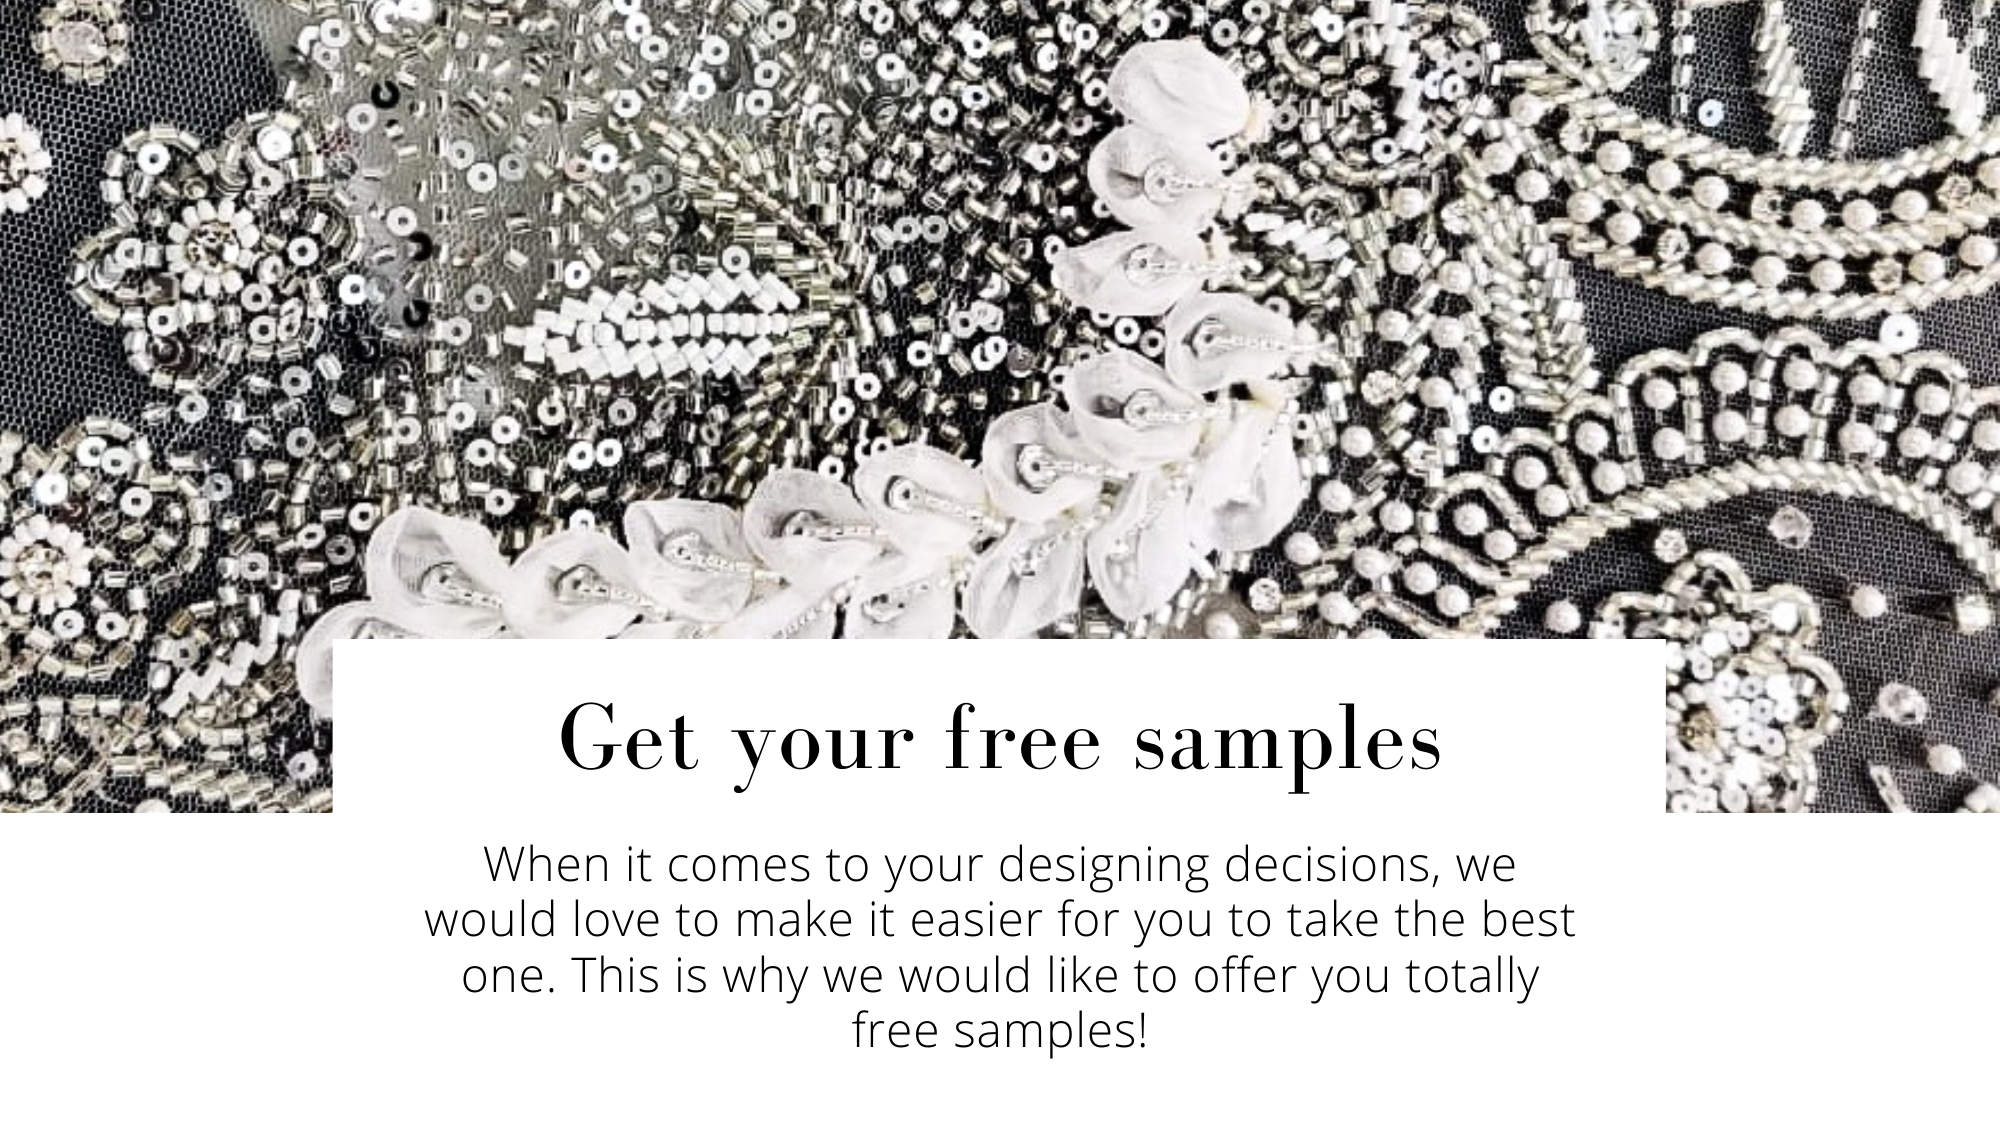 Get exclusive free samples online